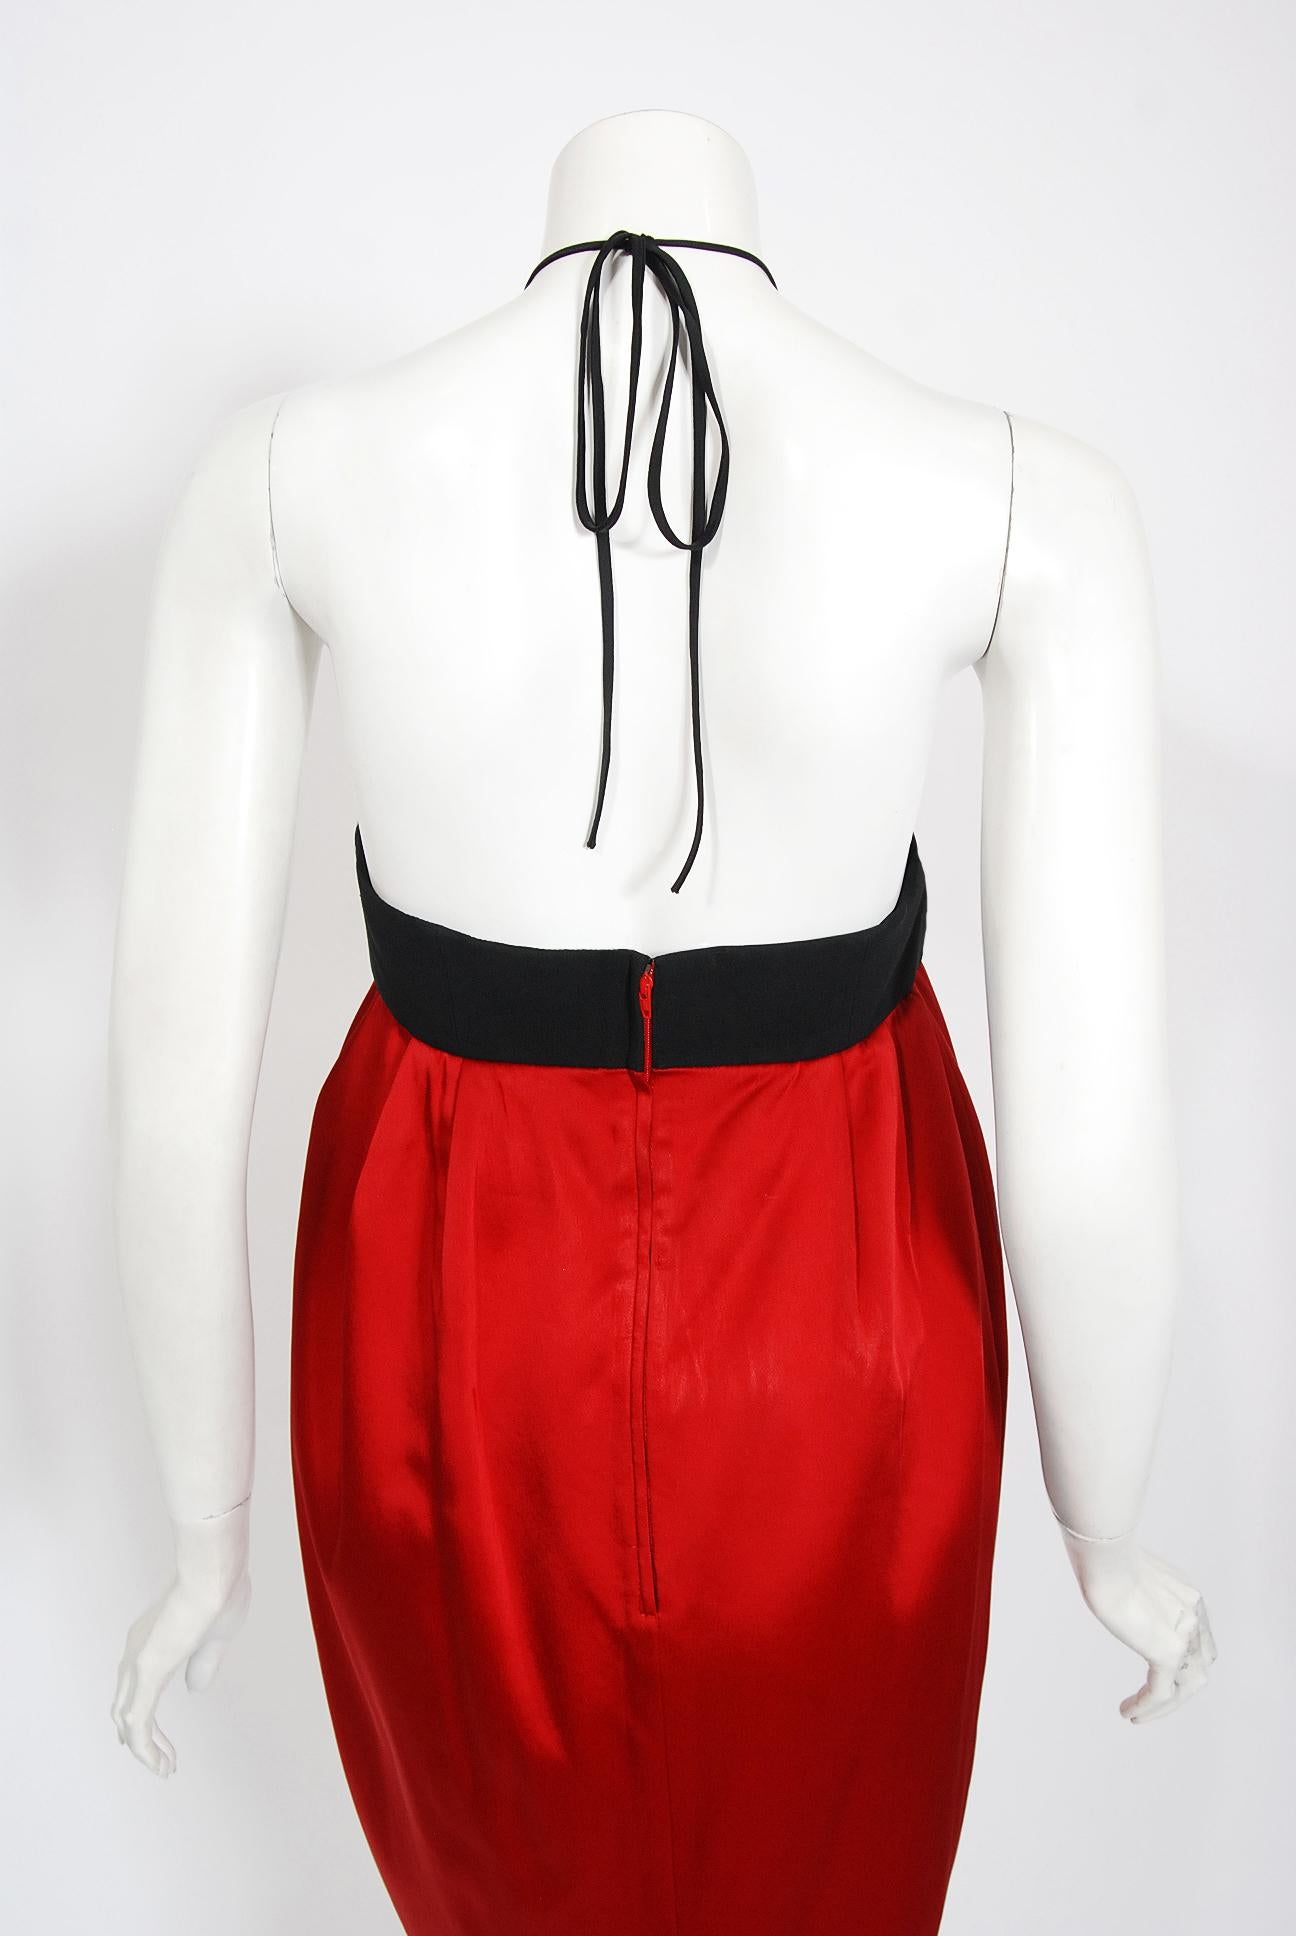 Moschino Couture Robe dos nu « Ladybug » fantaisie vintage en soie noire et rouge, 1995 en vente 7